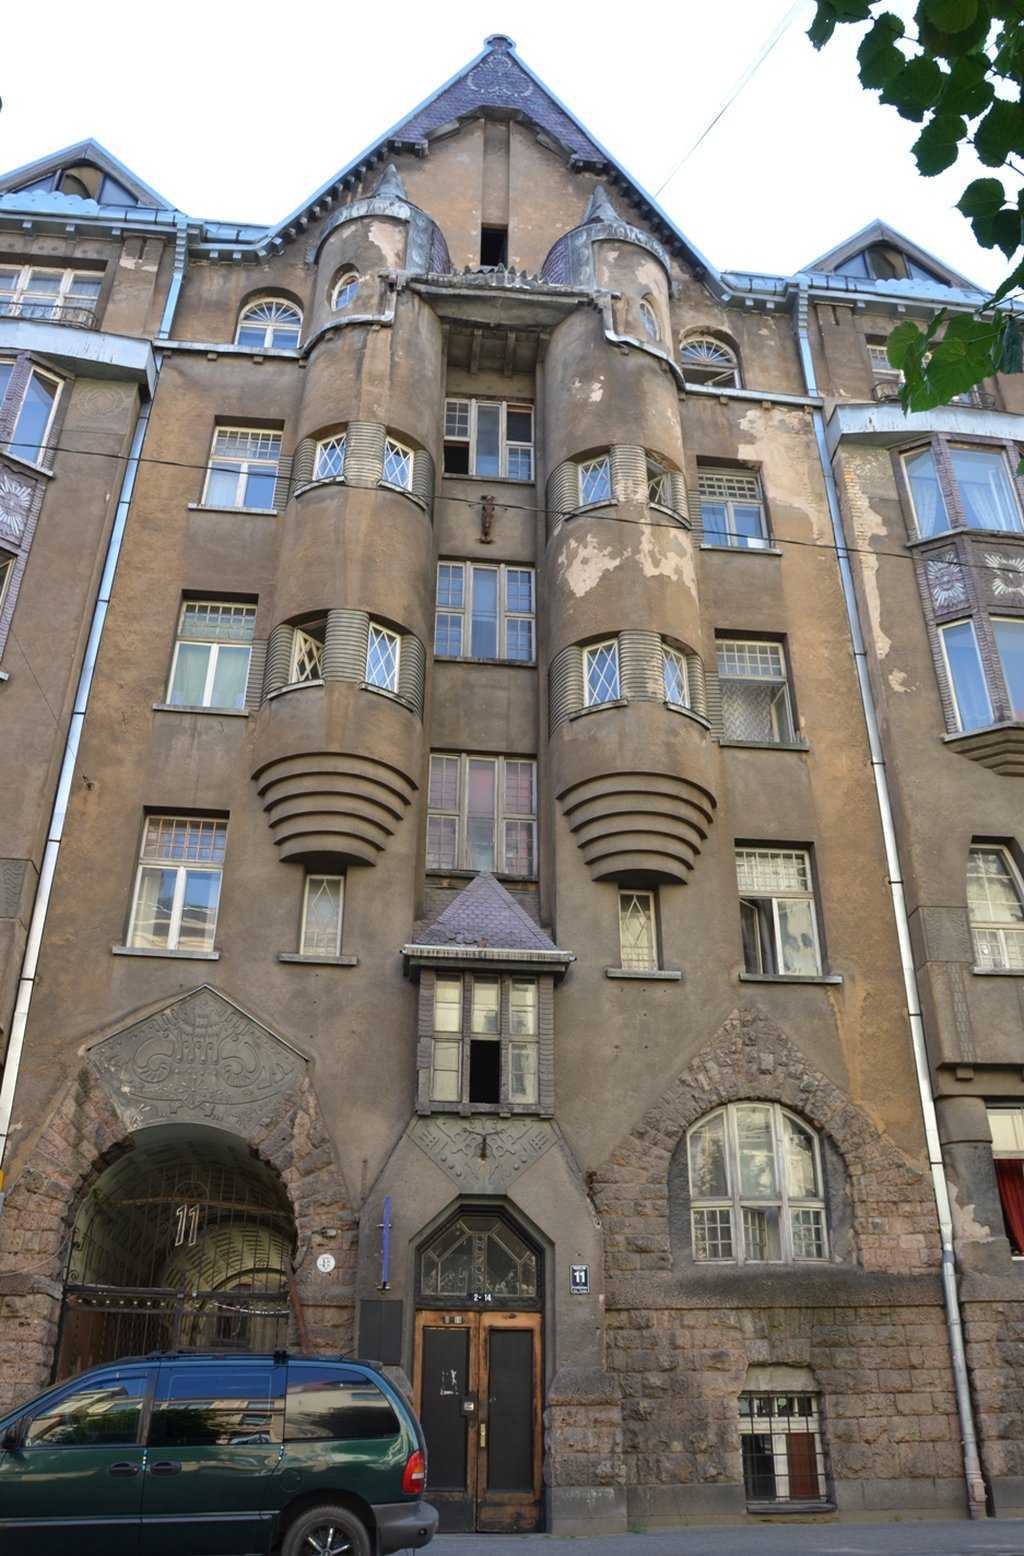 Alberta iela 11 adresindeki Ulusal romantizm (National Romanticism) stilindeki Art Nouveau yapı – 1908, Mimar Eižens Laube…